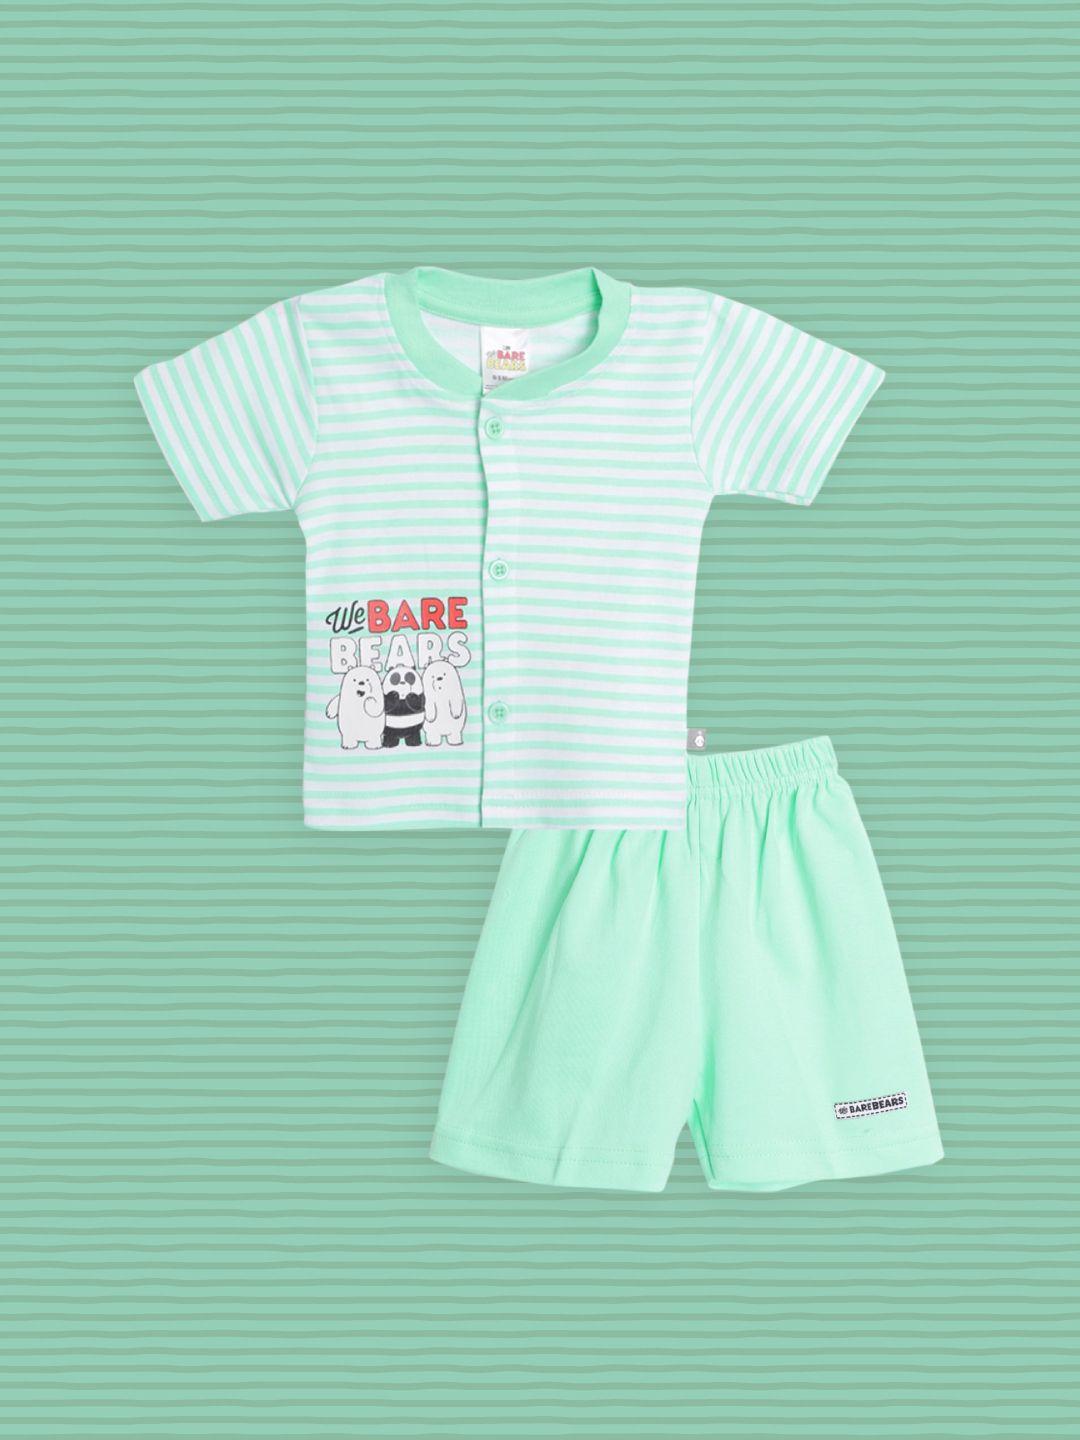 tinyo infant white & green striped & we bare bears print cotton clothing set